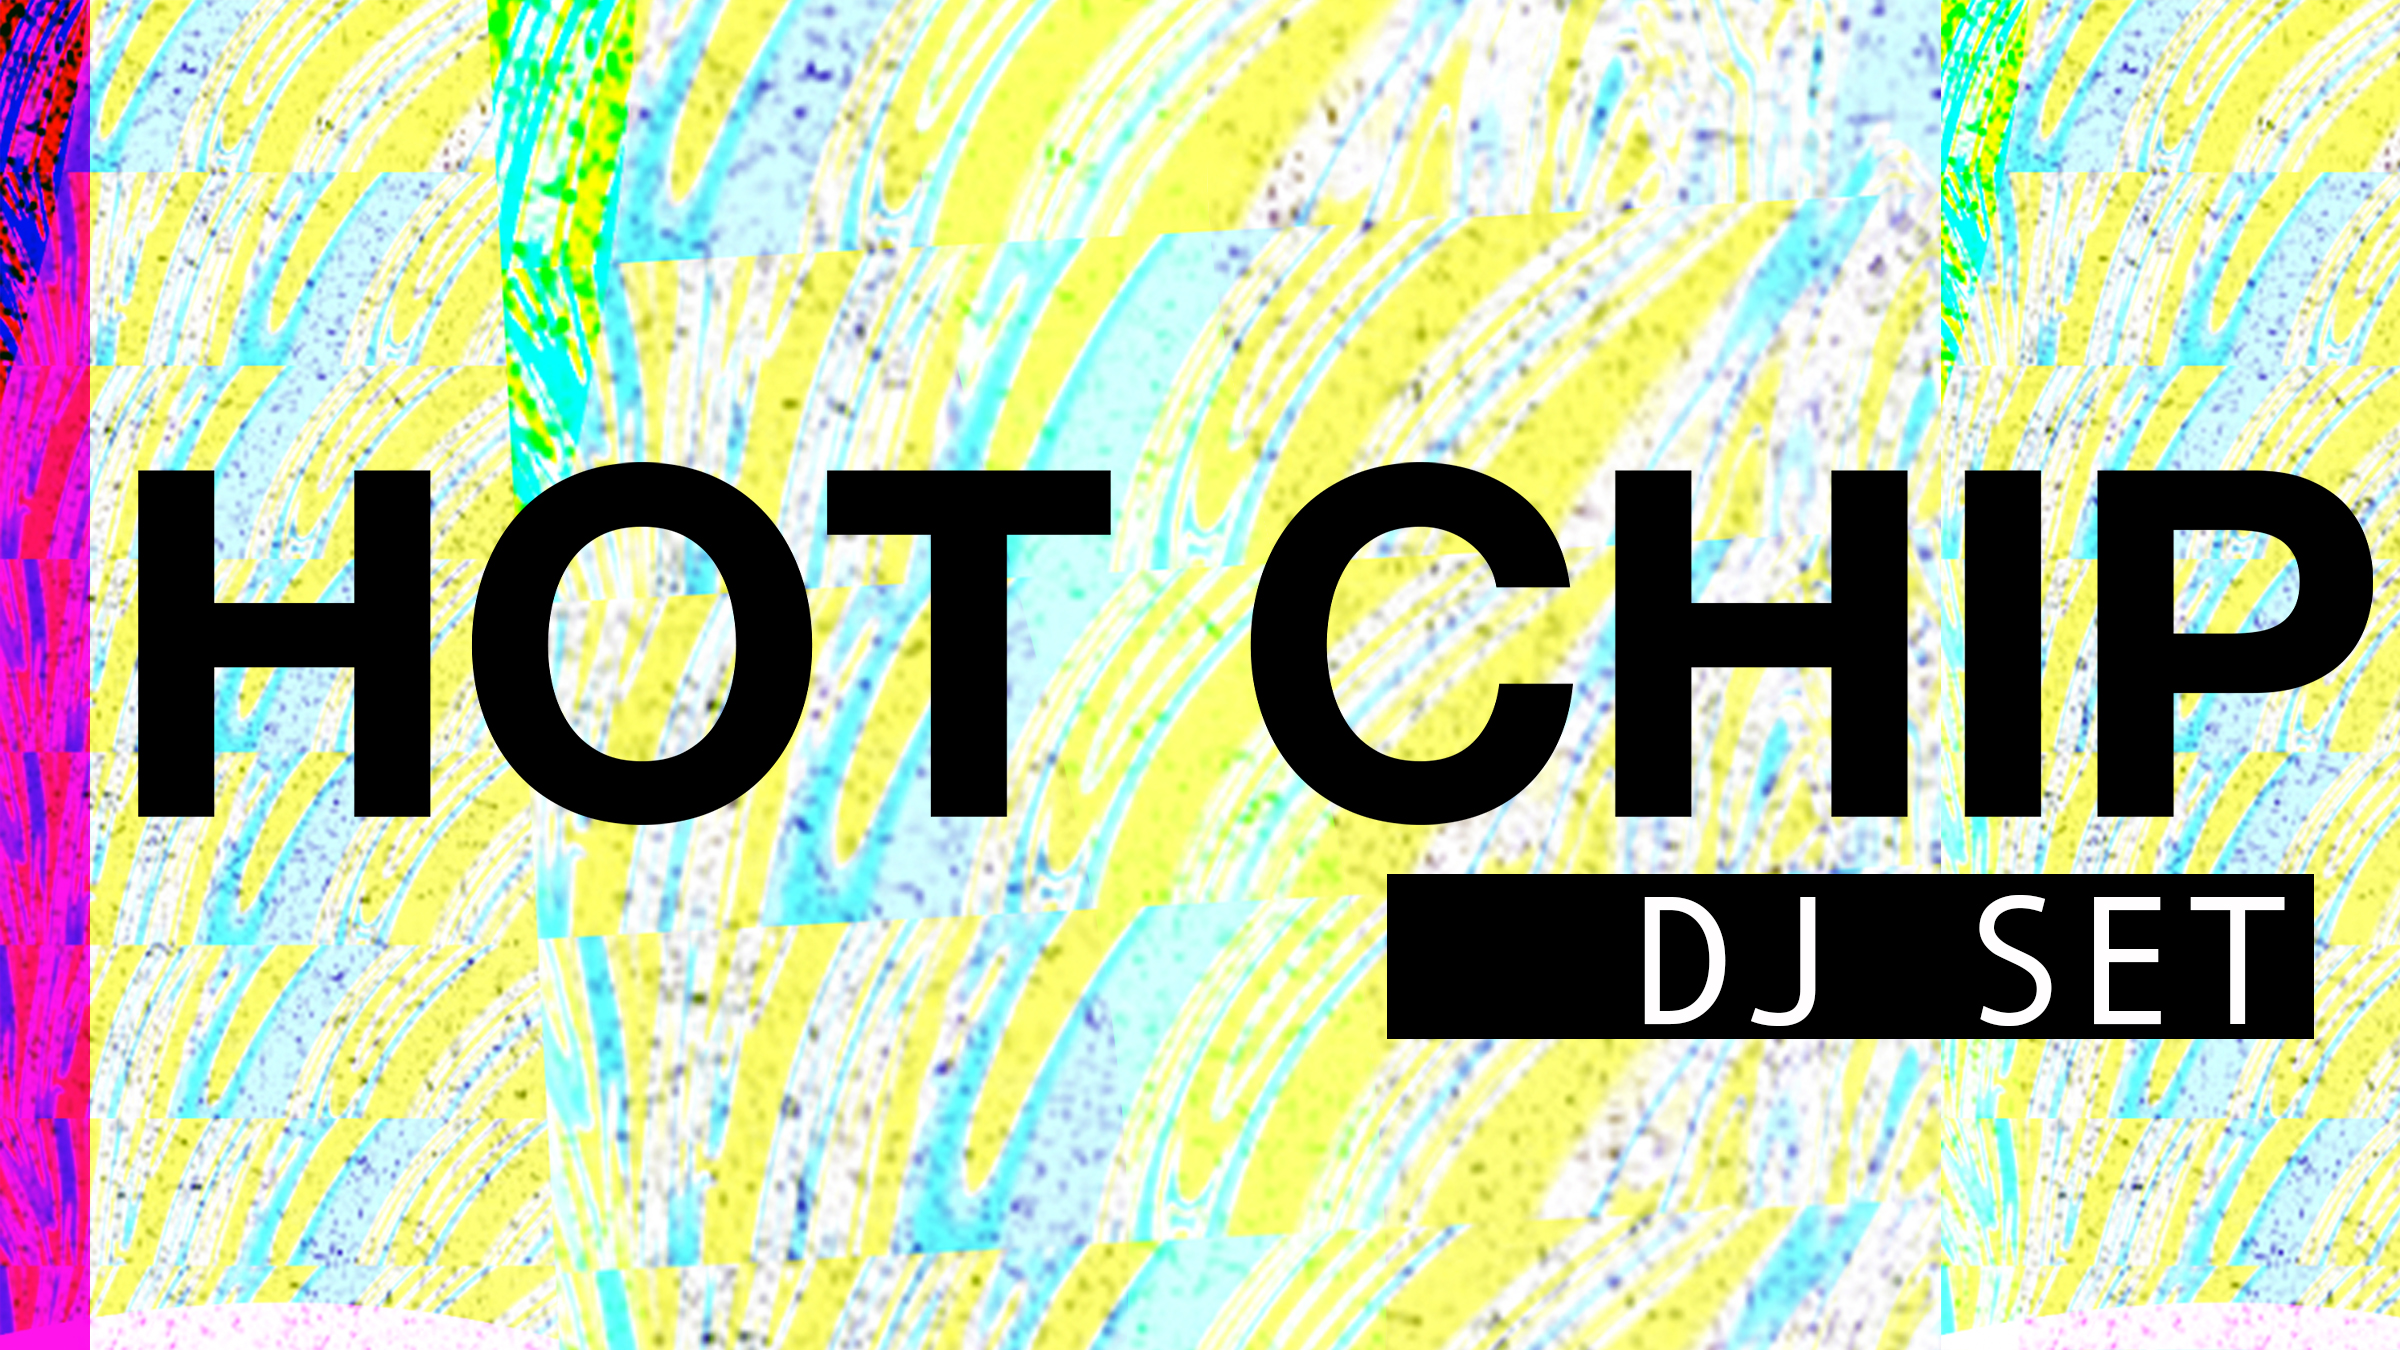 Hot Chip (DJ Set)